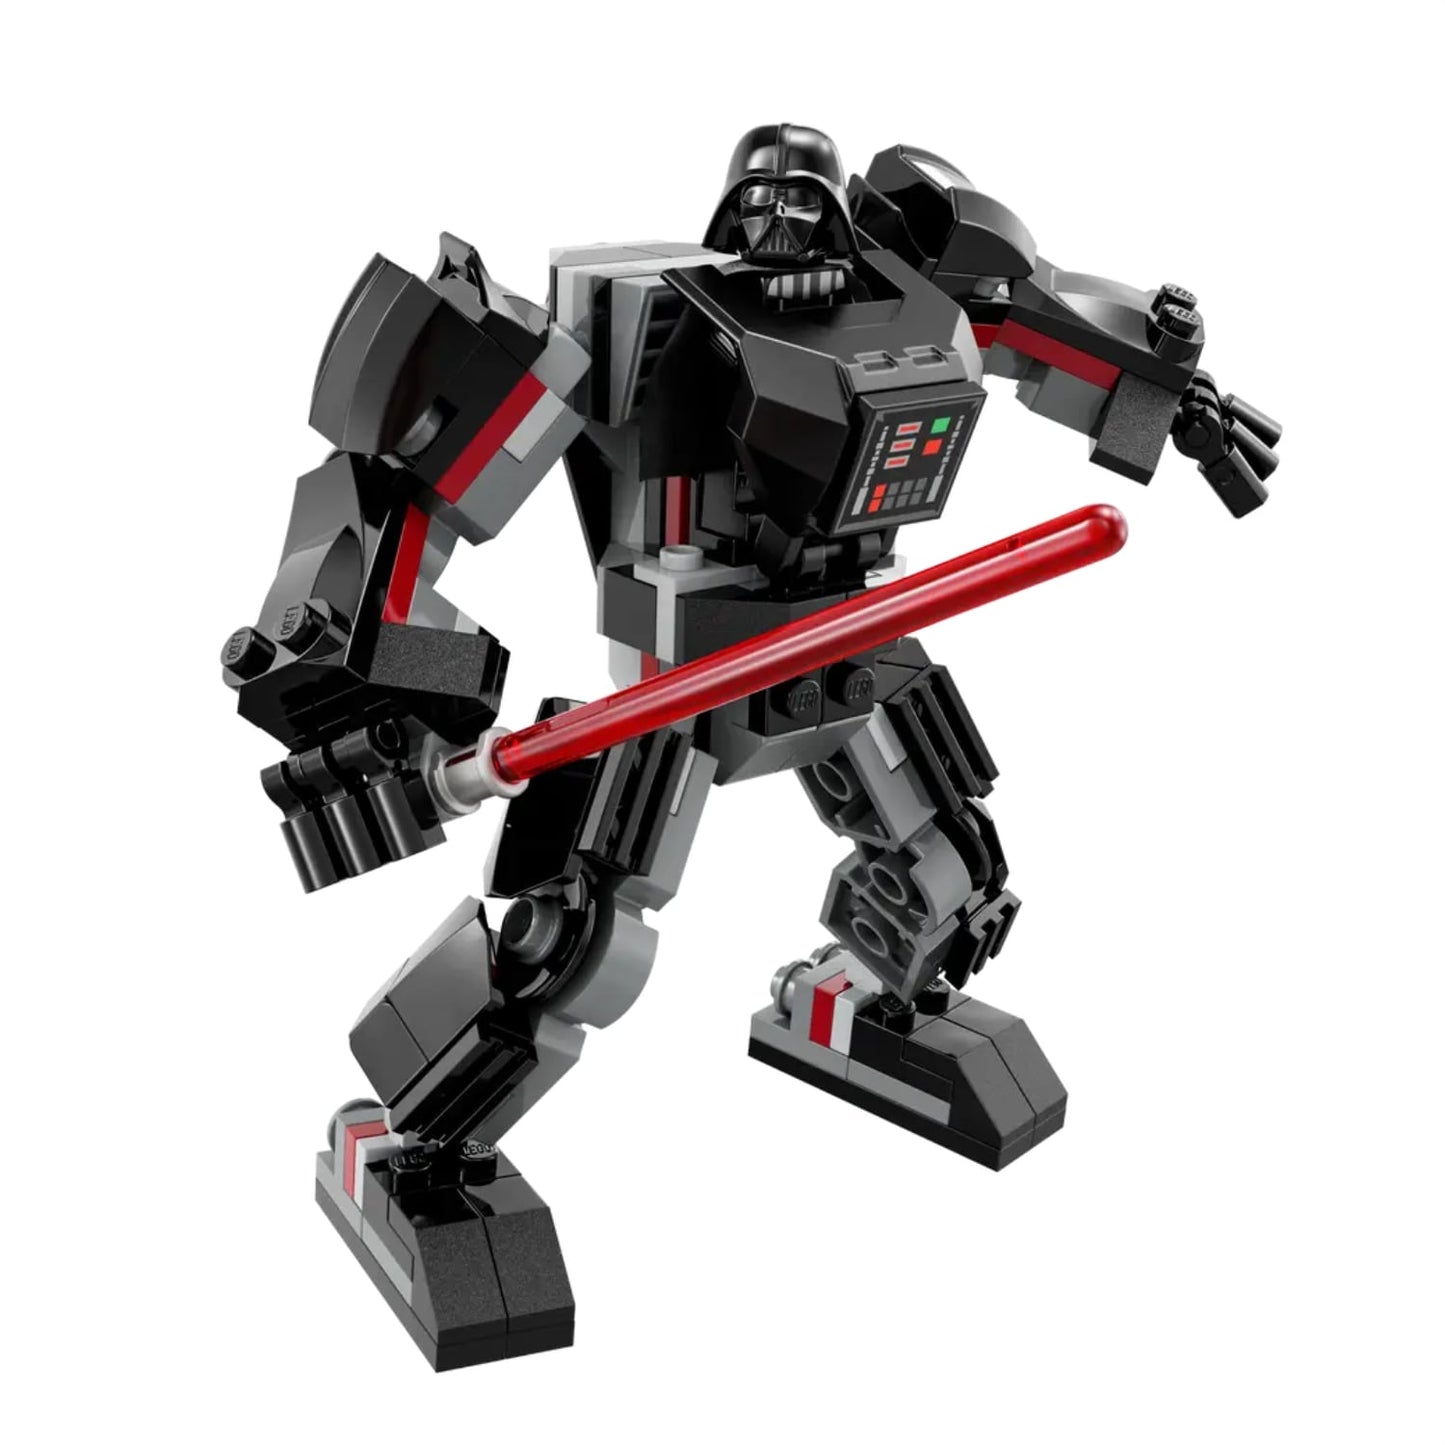 Lego 75368 Star Wars Darth Vader Mech